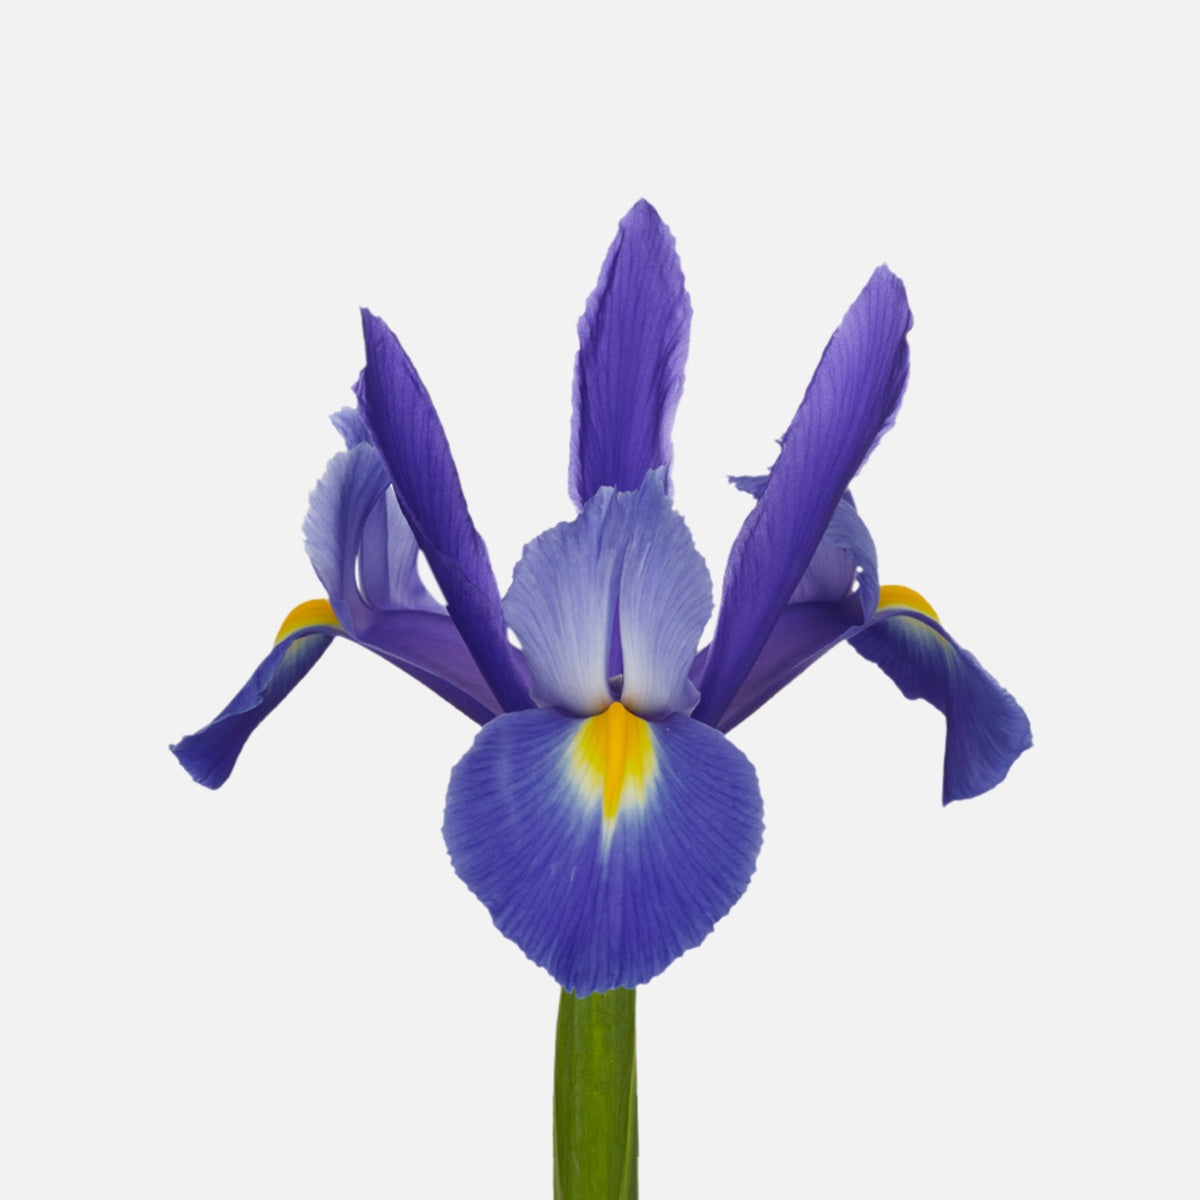 Iris blau-violett